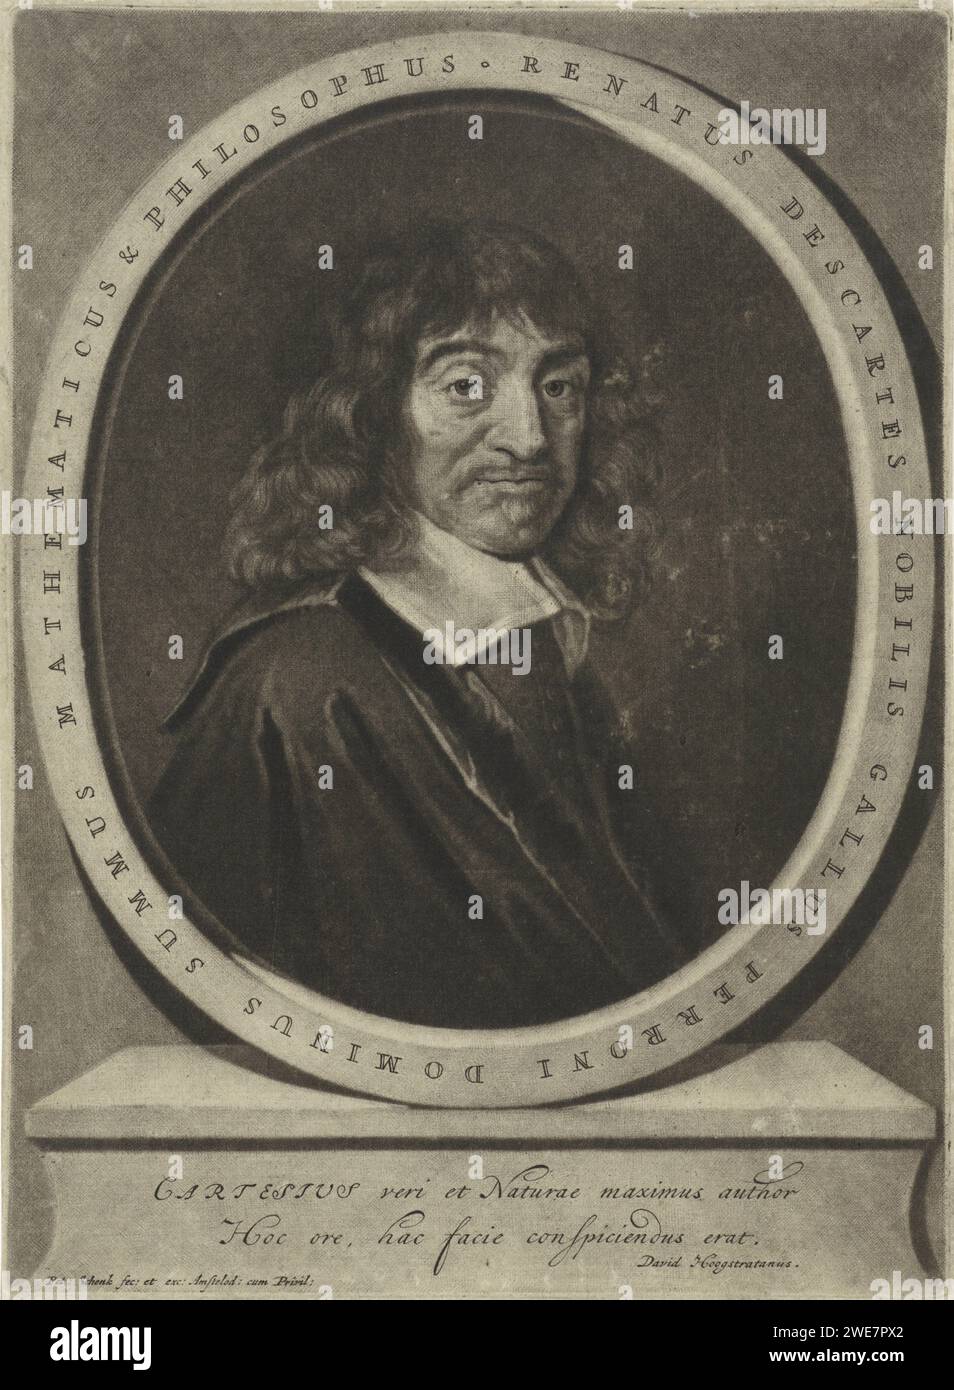 Portrait of René Descartes, Pieter Schenk (I), After Frans Hals, 1670 - 1713 print René Descartes, French philosopher and mathematician. Amsterdam paper engraving Stock Photo